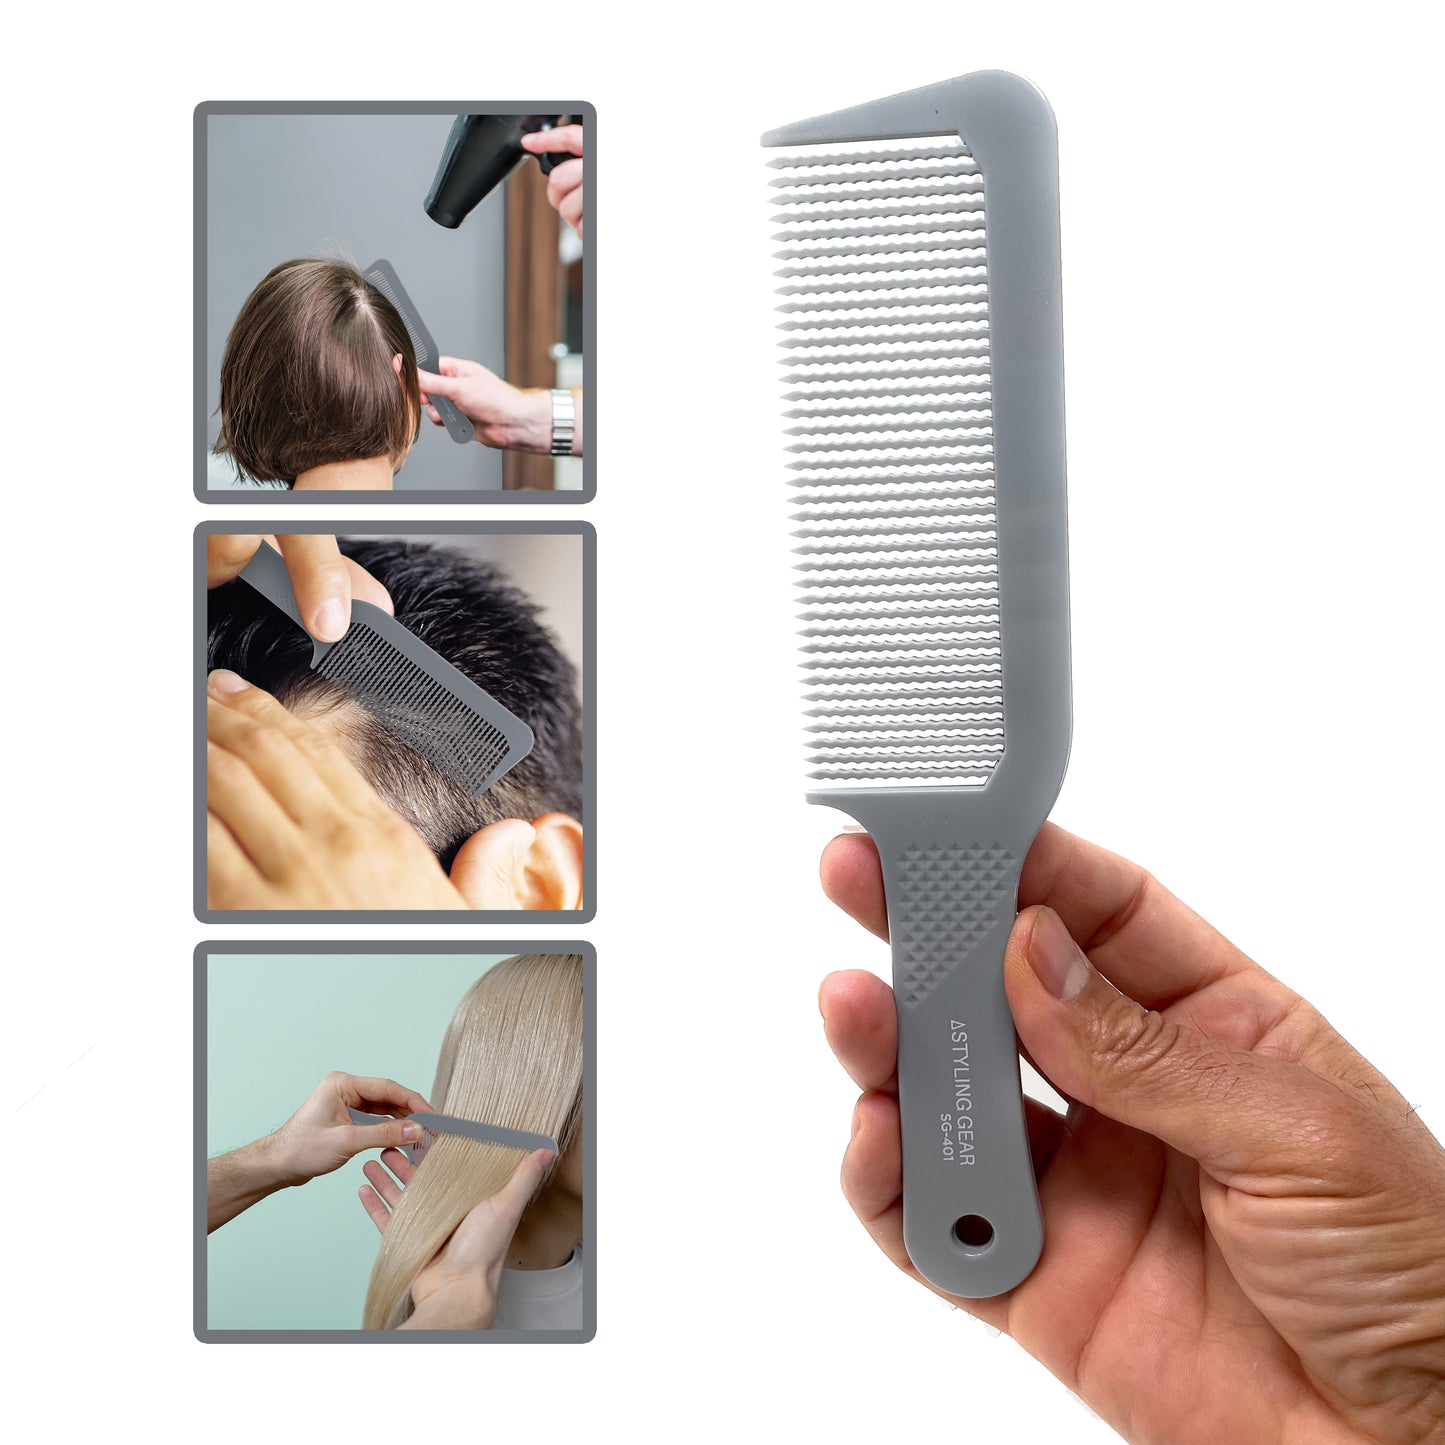 Styling Gear 401 XL Clipper Comb Flat Top Barber Comb For Flattop Hair Cutting Long Handle Wavy Teeth Gray 2 Pcs.